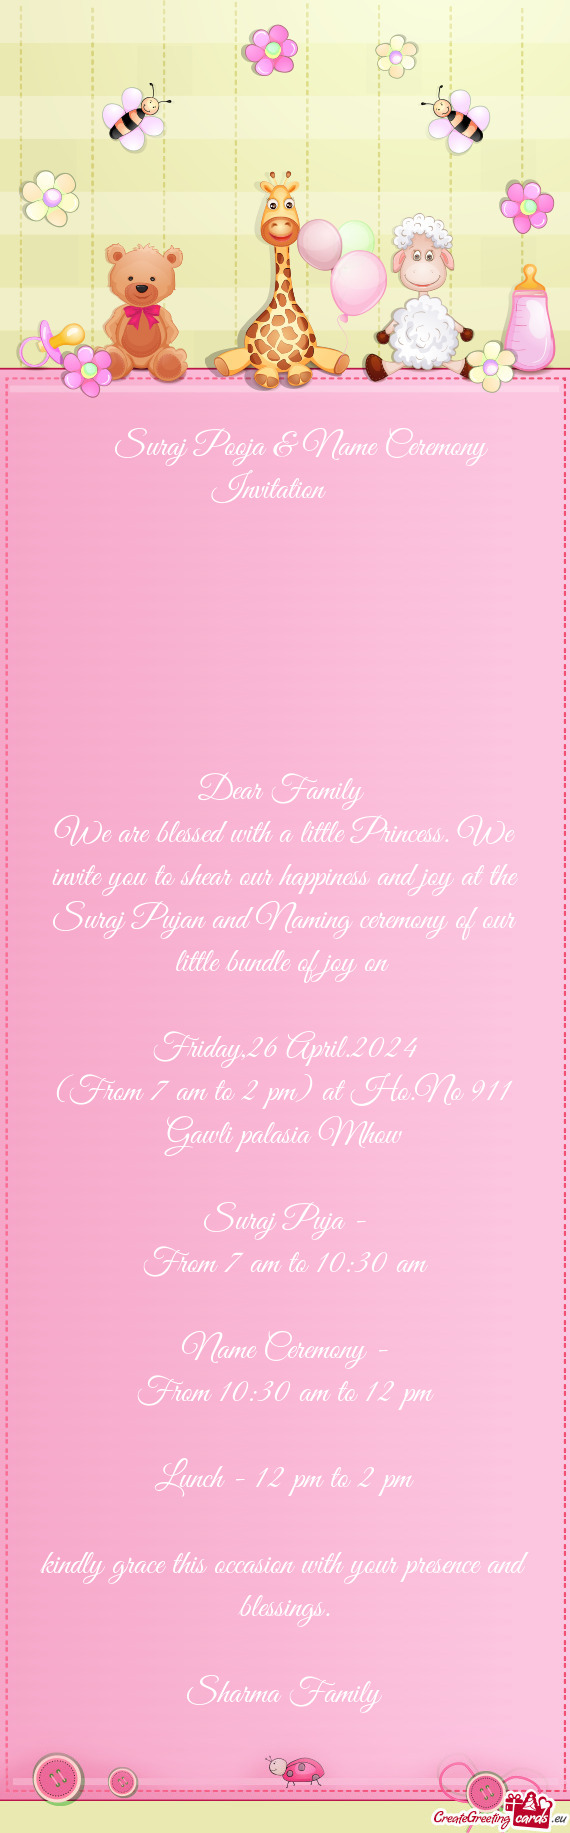 ☆Suraj Pooja & Name Ceremony Invitation☆